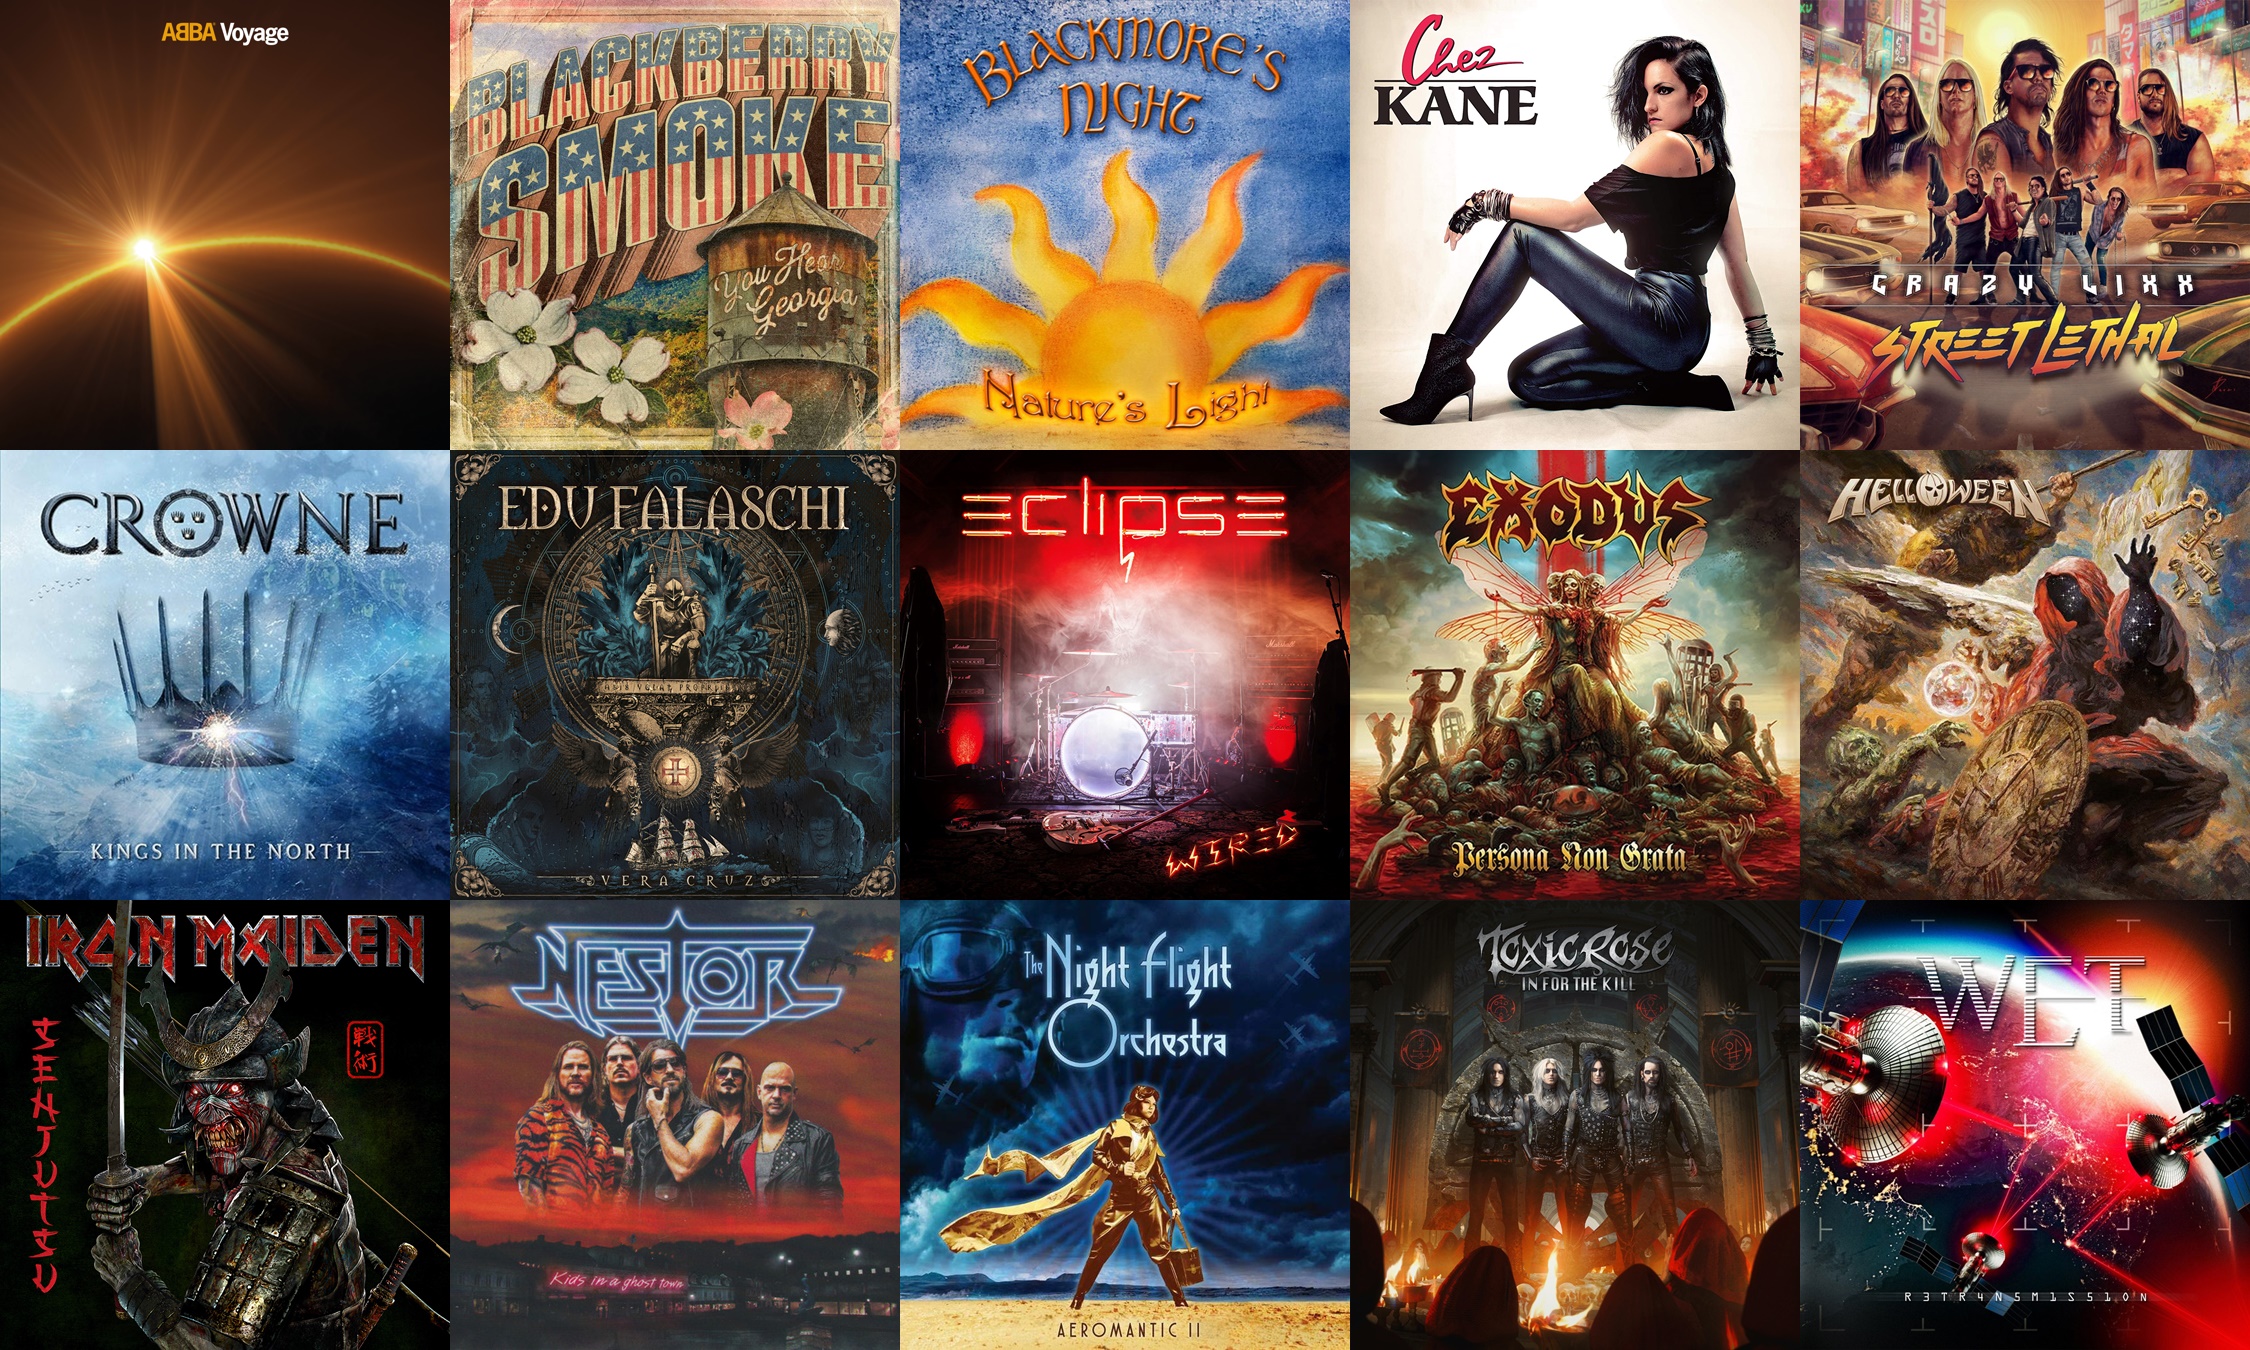 15 álbuns de destaque lançados em 2021; ouça playlist